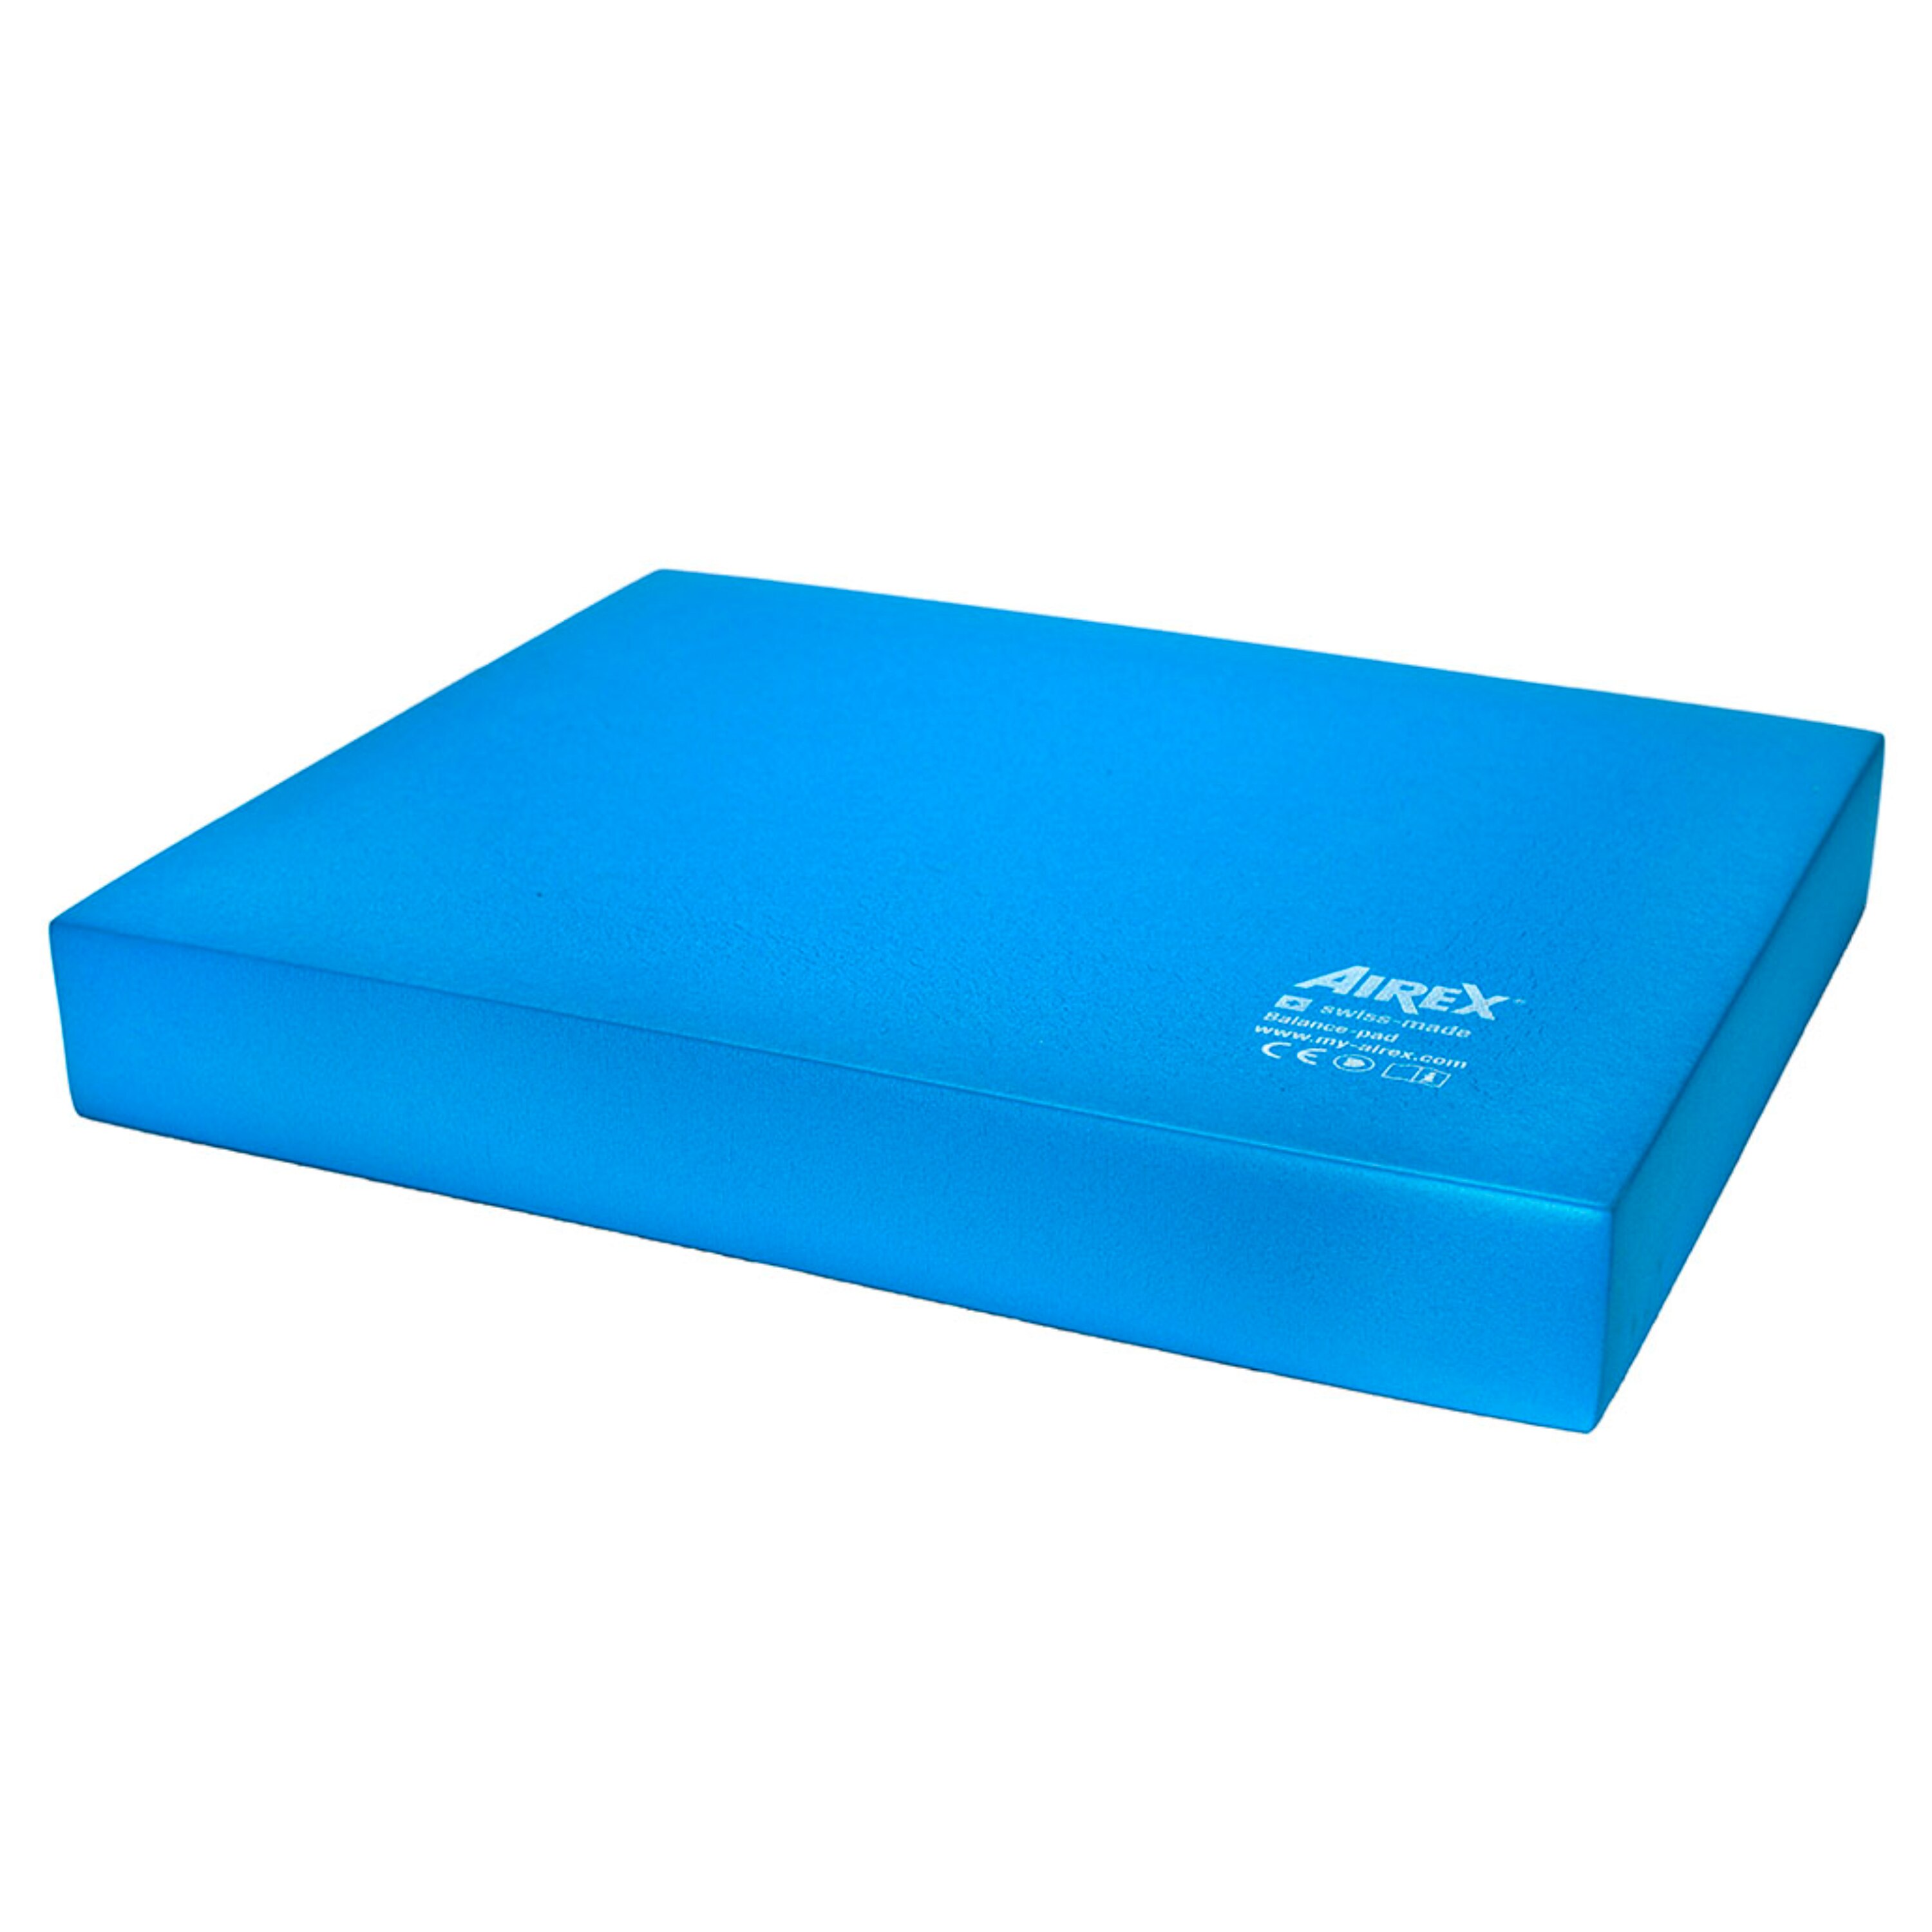 Airex Balance Pad Standard, 16" x 20" x 2.25", Blue